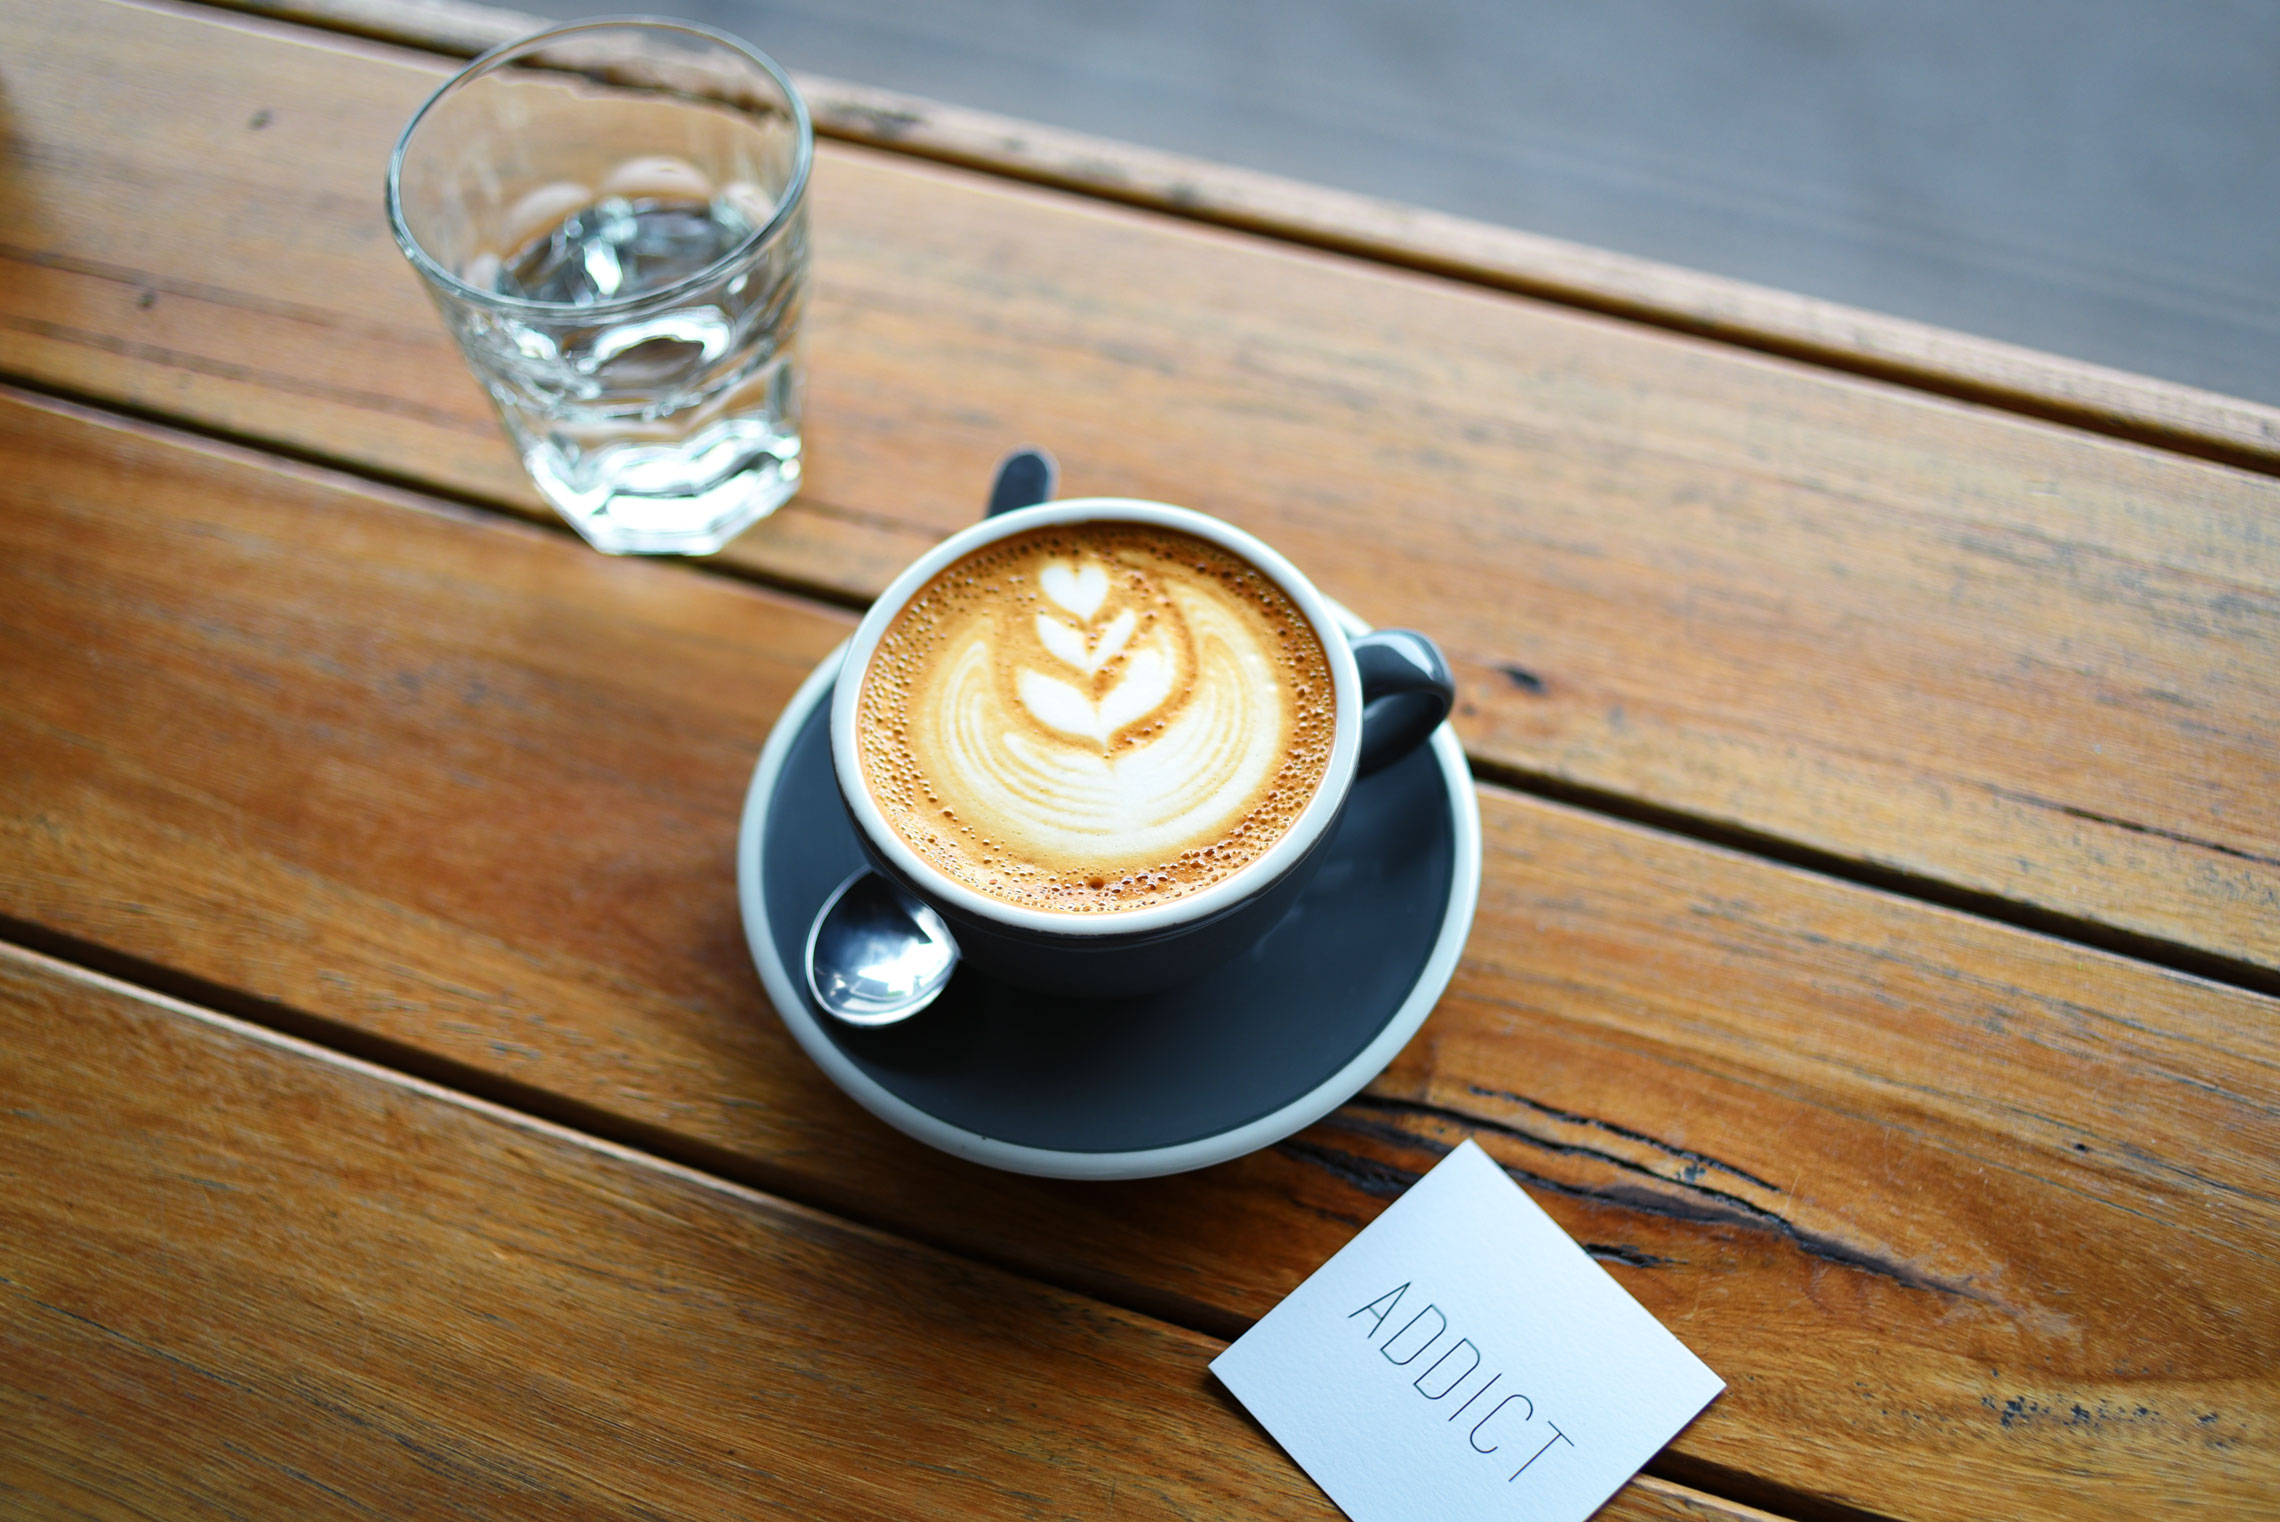 Melbourne Coffee, Australia